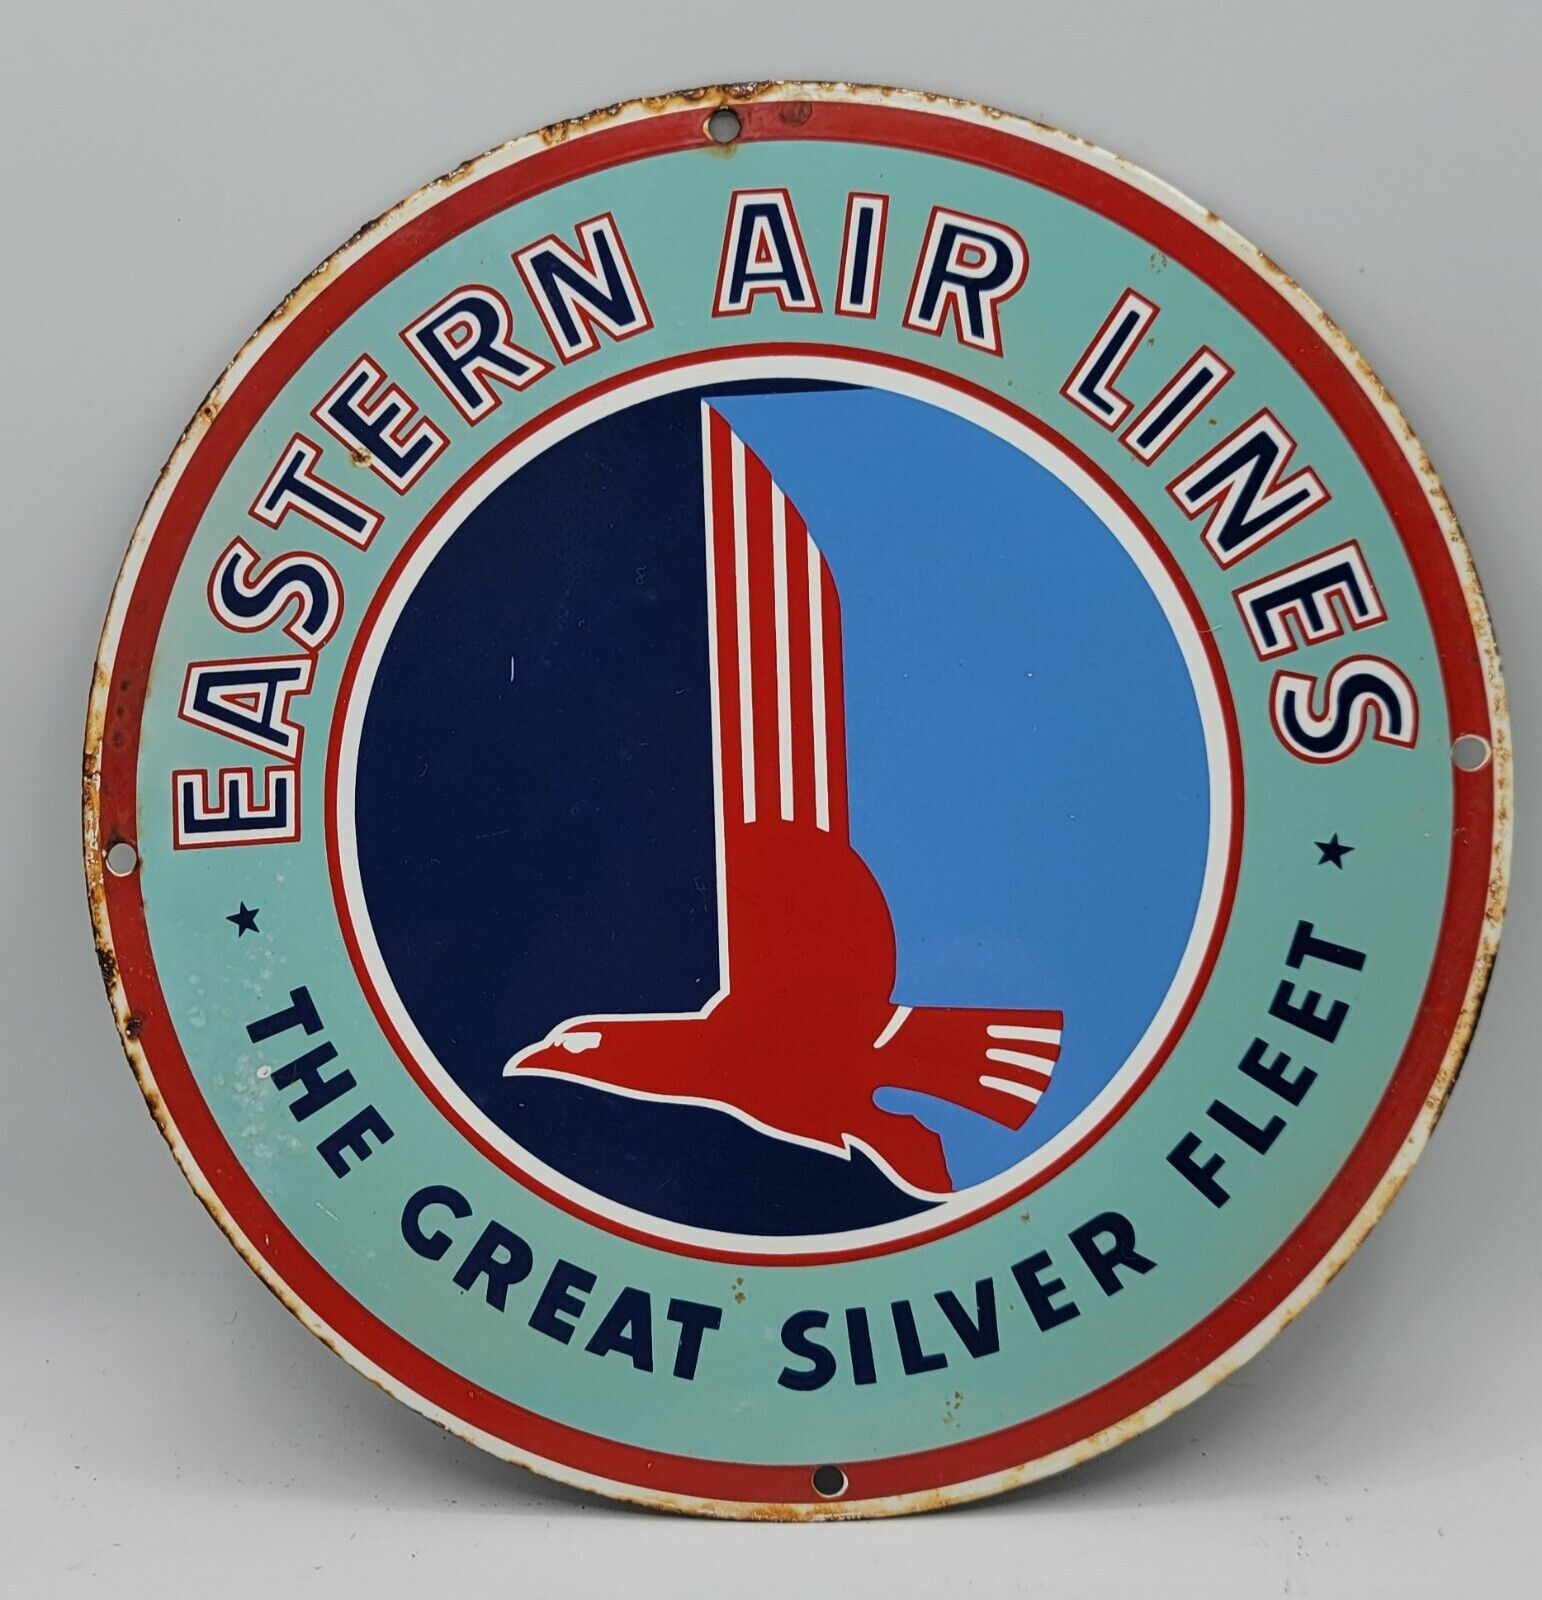 Vintage Rustic Porcelain Metal Sign Eastern Air Lines The Great Silver Fleet 